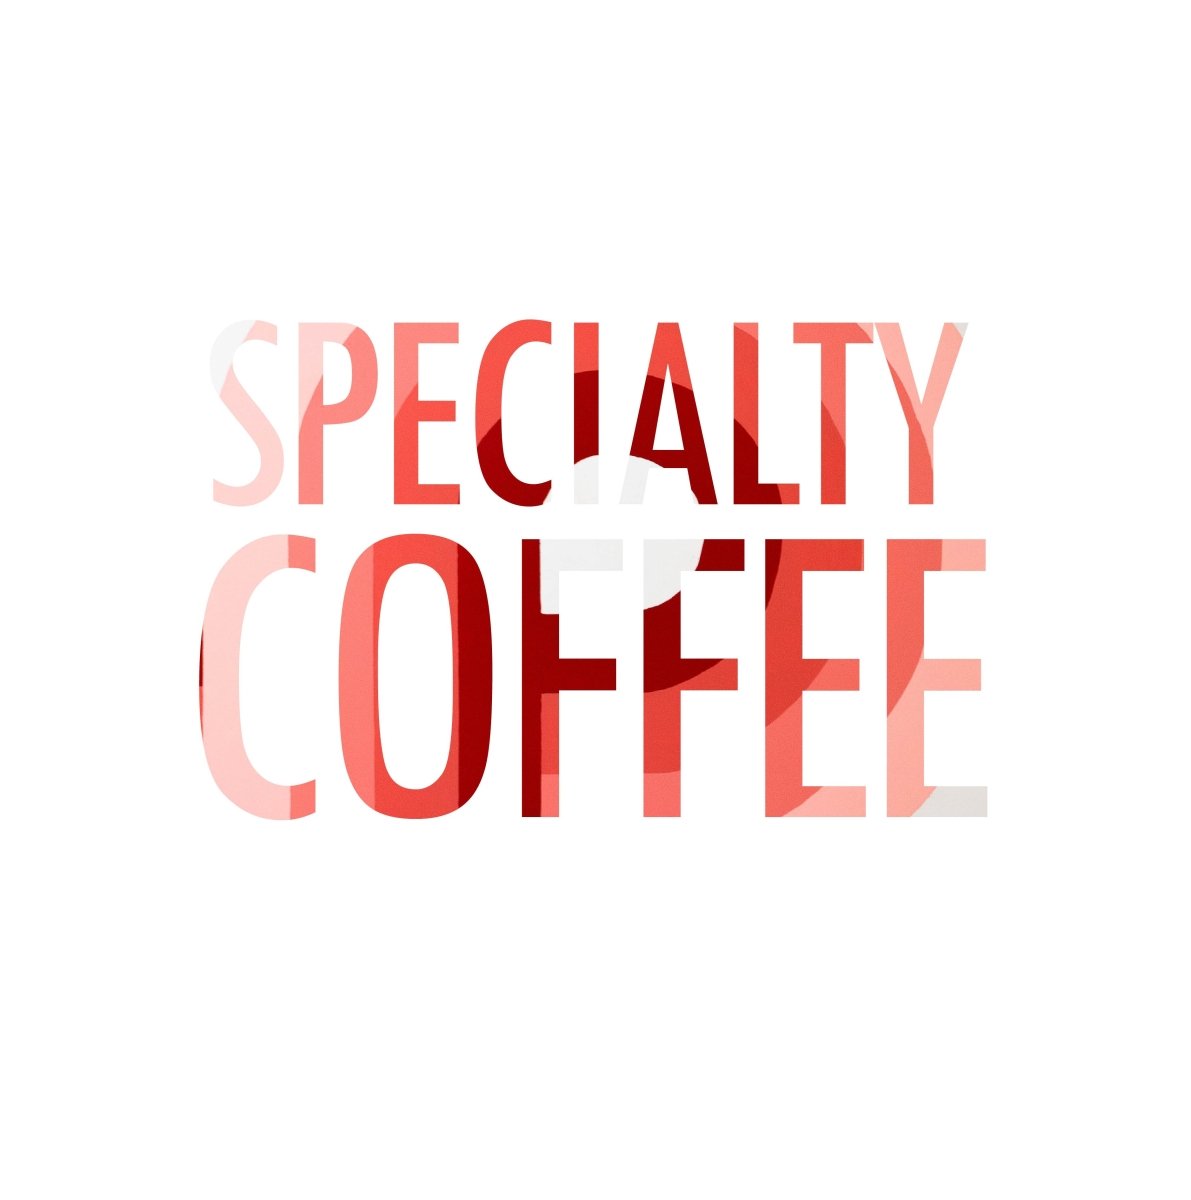 Coffee - Vanguard Specialty Coffee Company